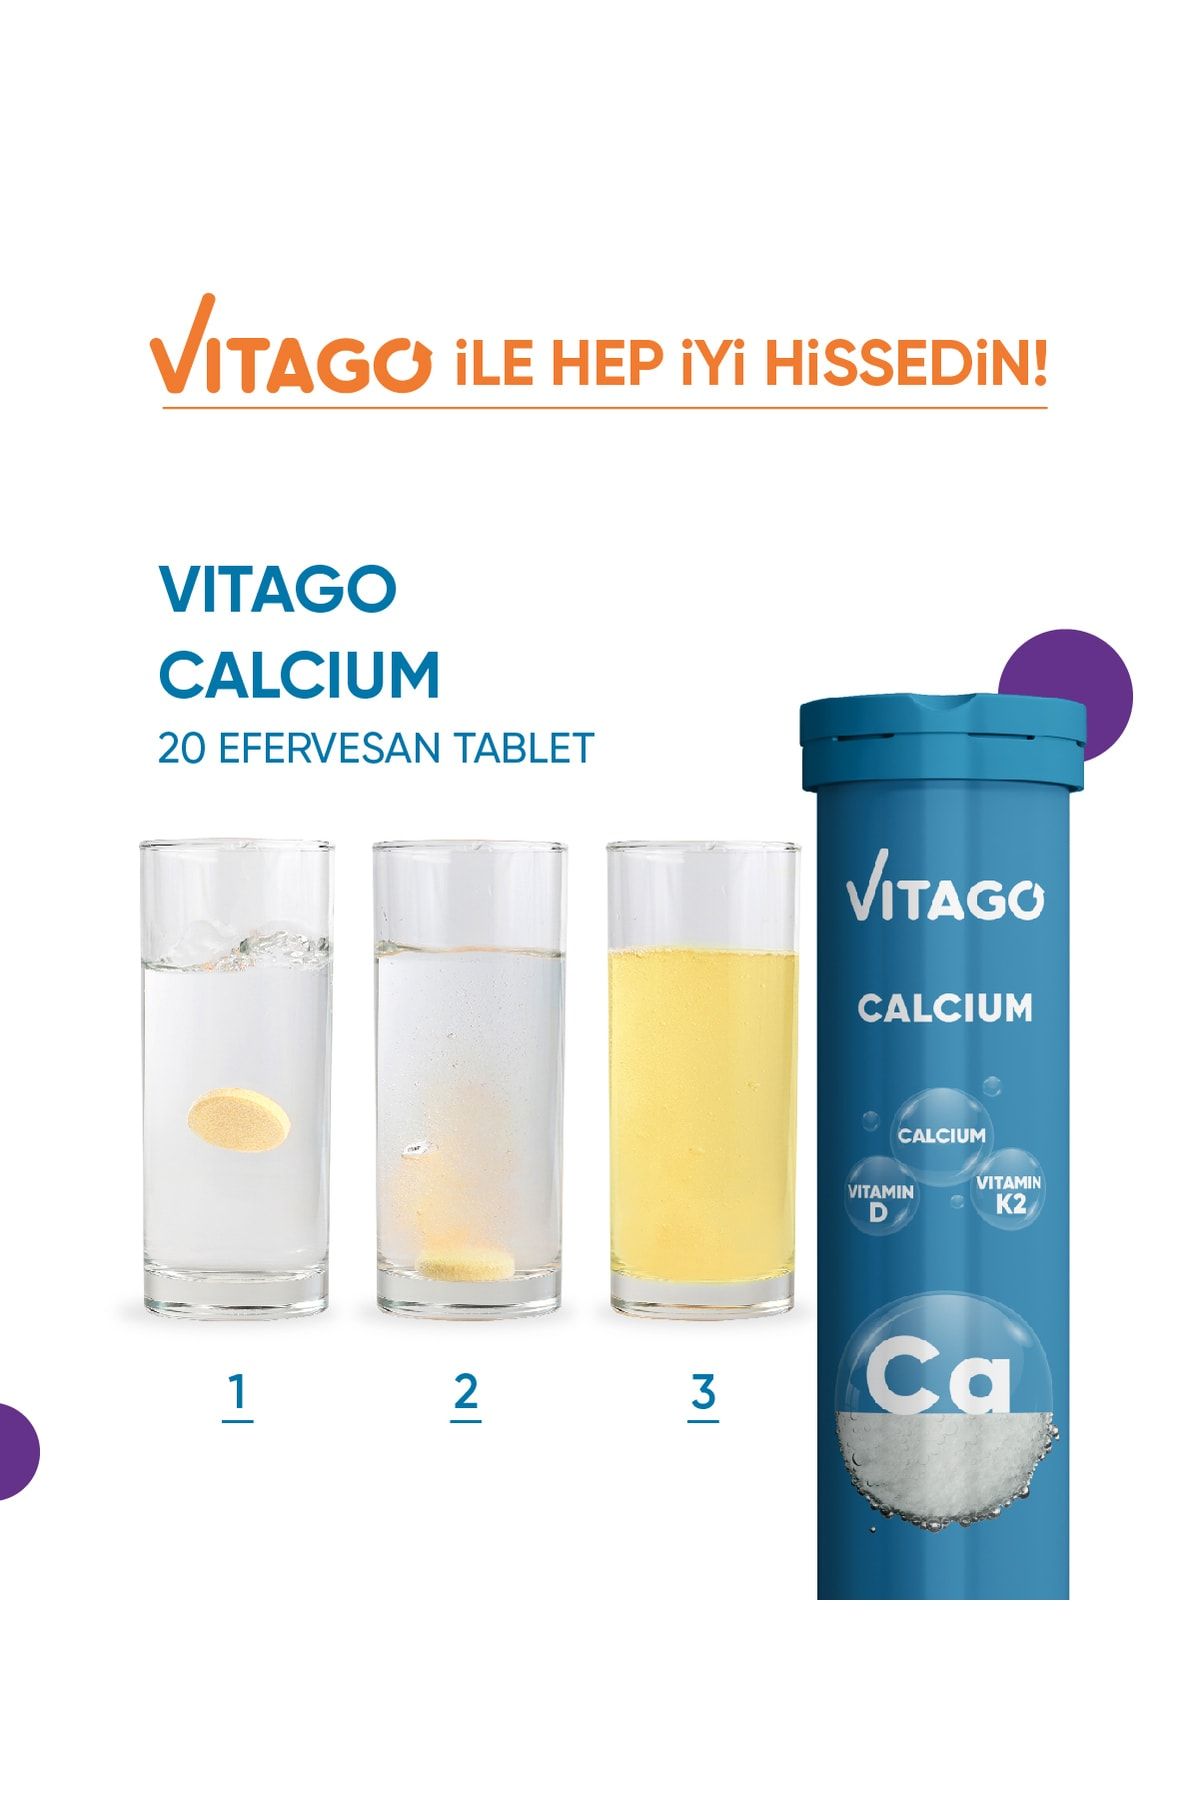 Vitago قرص حلقوی ویتامین D و کلسیم با ویتامین K2